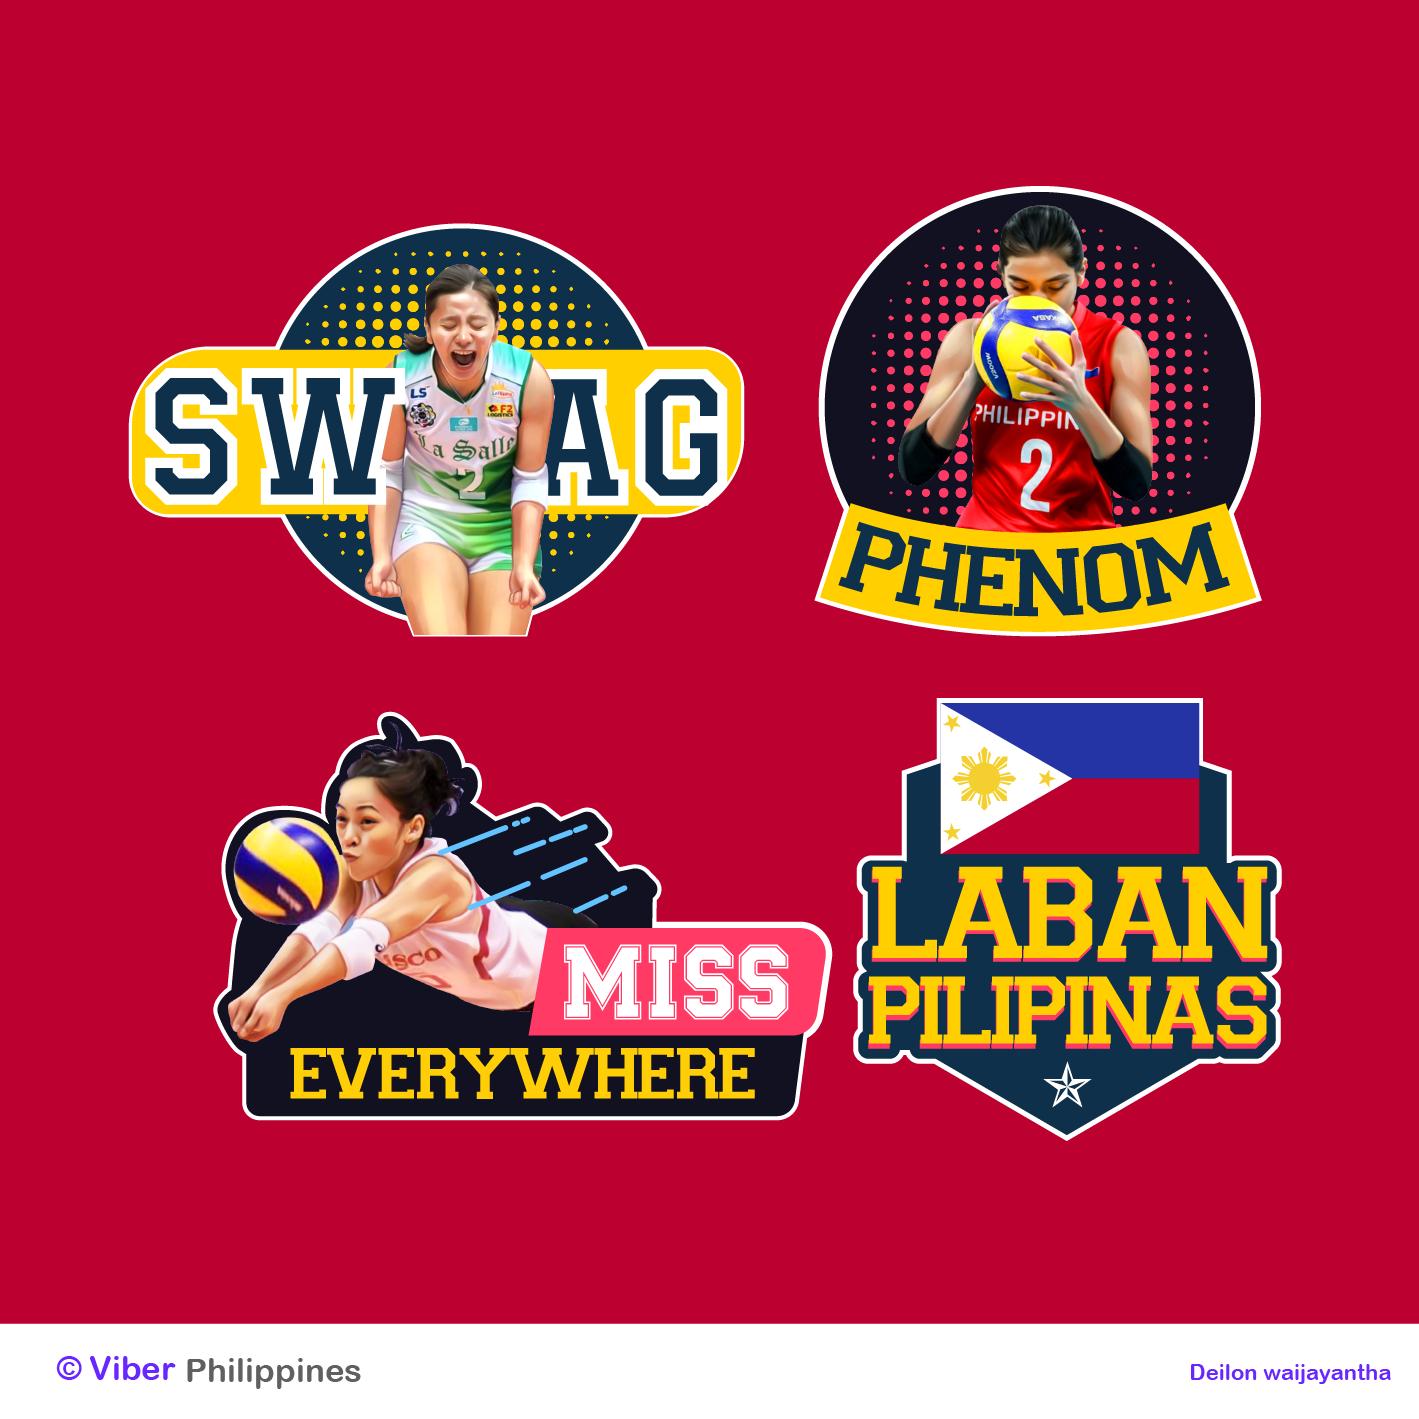 Viber Philippines